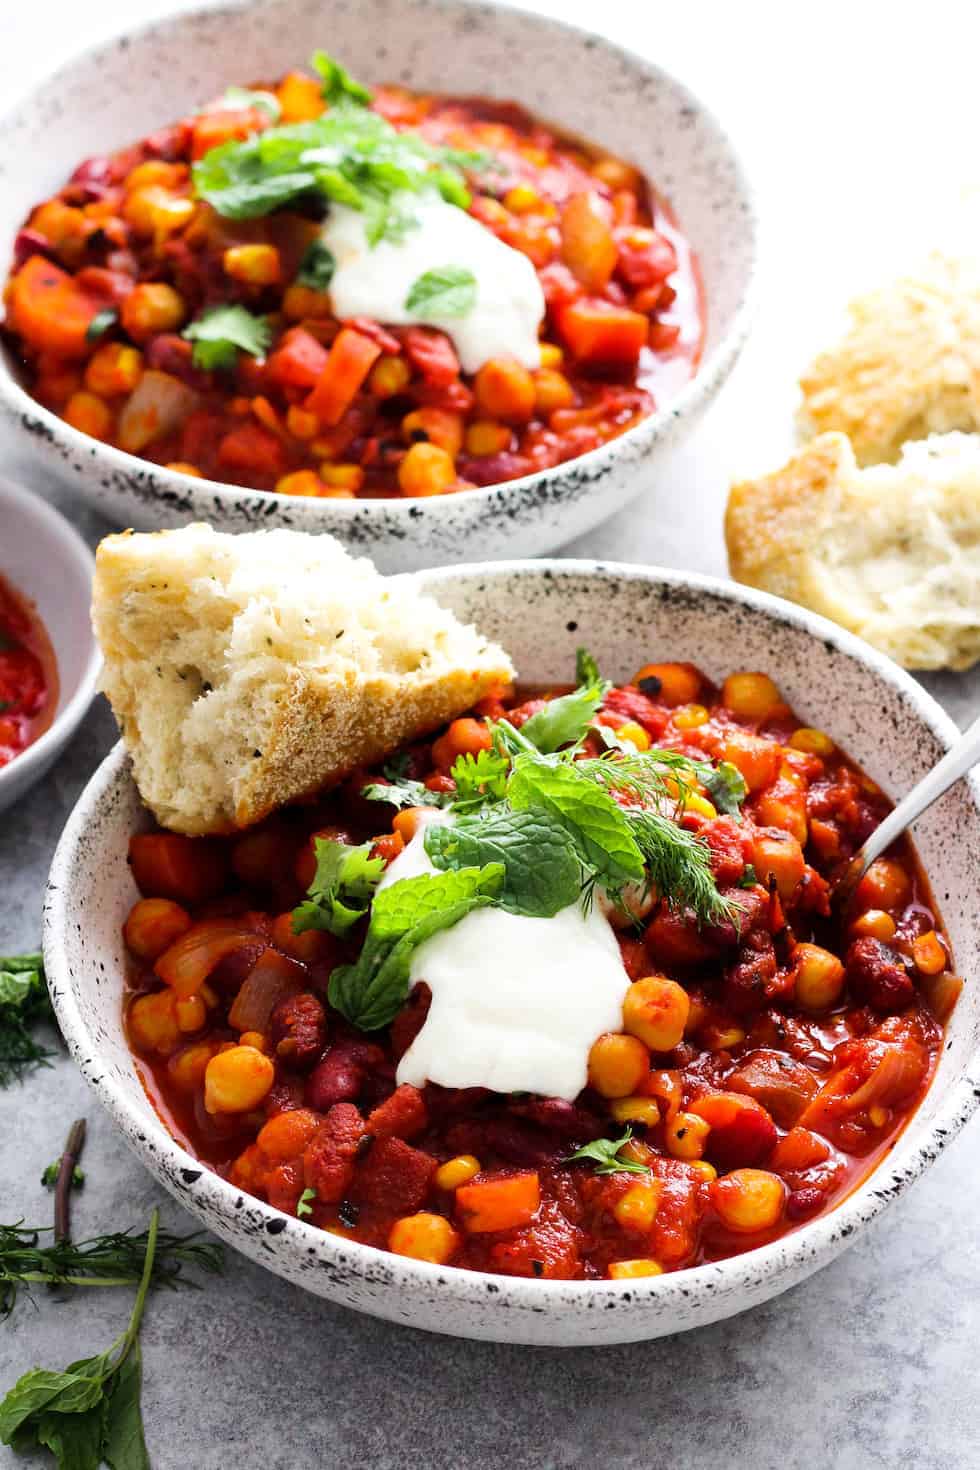 Vegan soup recipes, harissa bean chili in white bowl with bread.